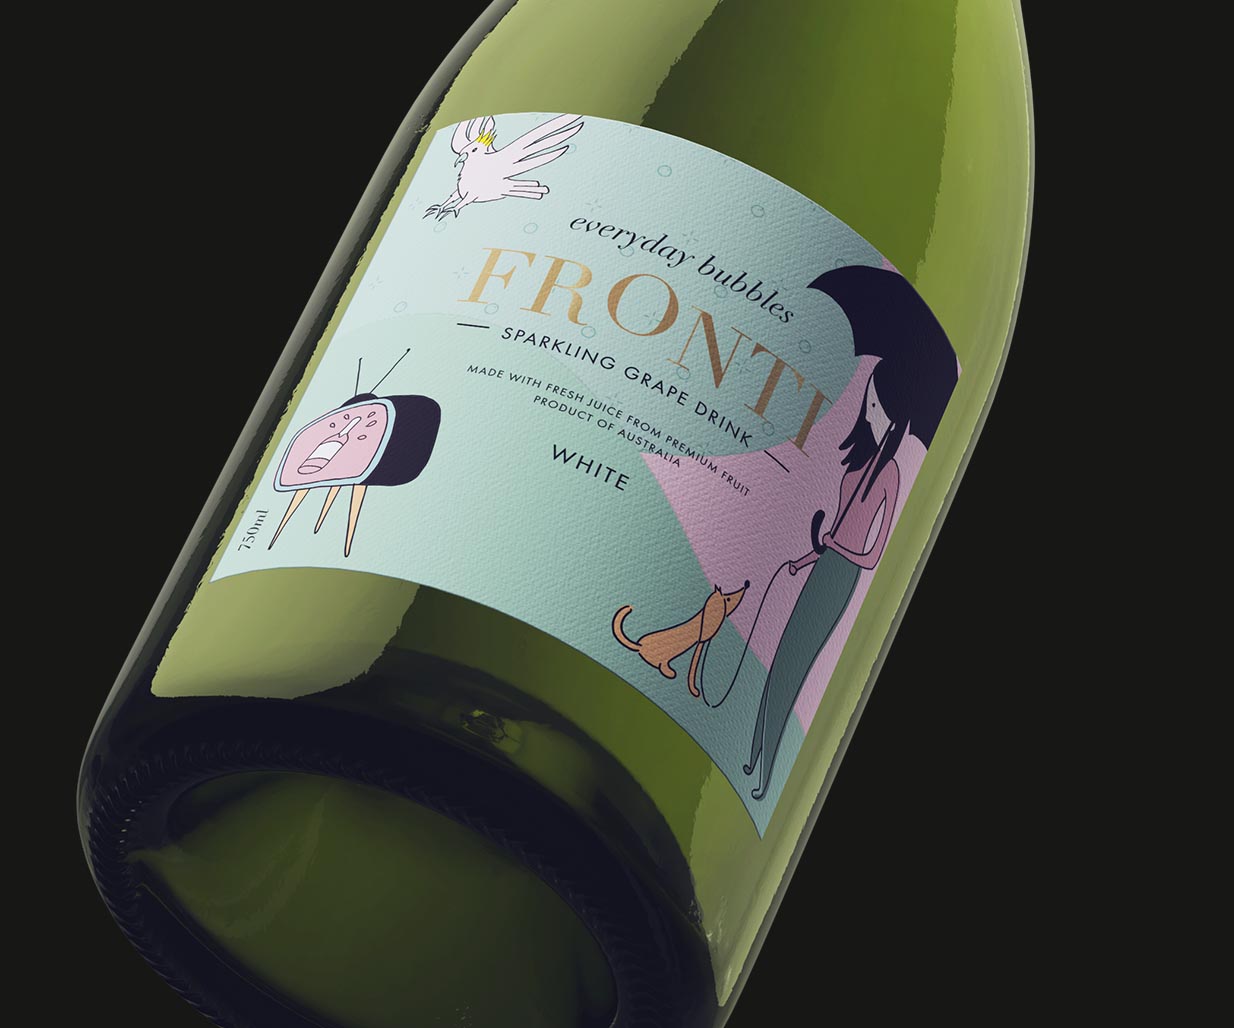 Wine Packaging Design project by Branding Agency, Percept, image J